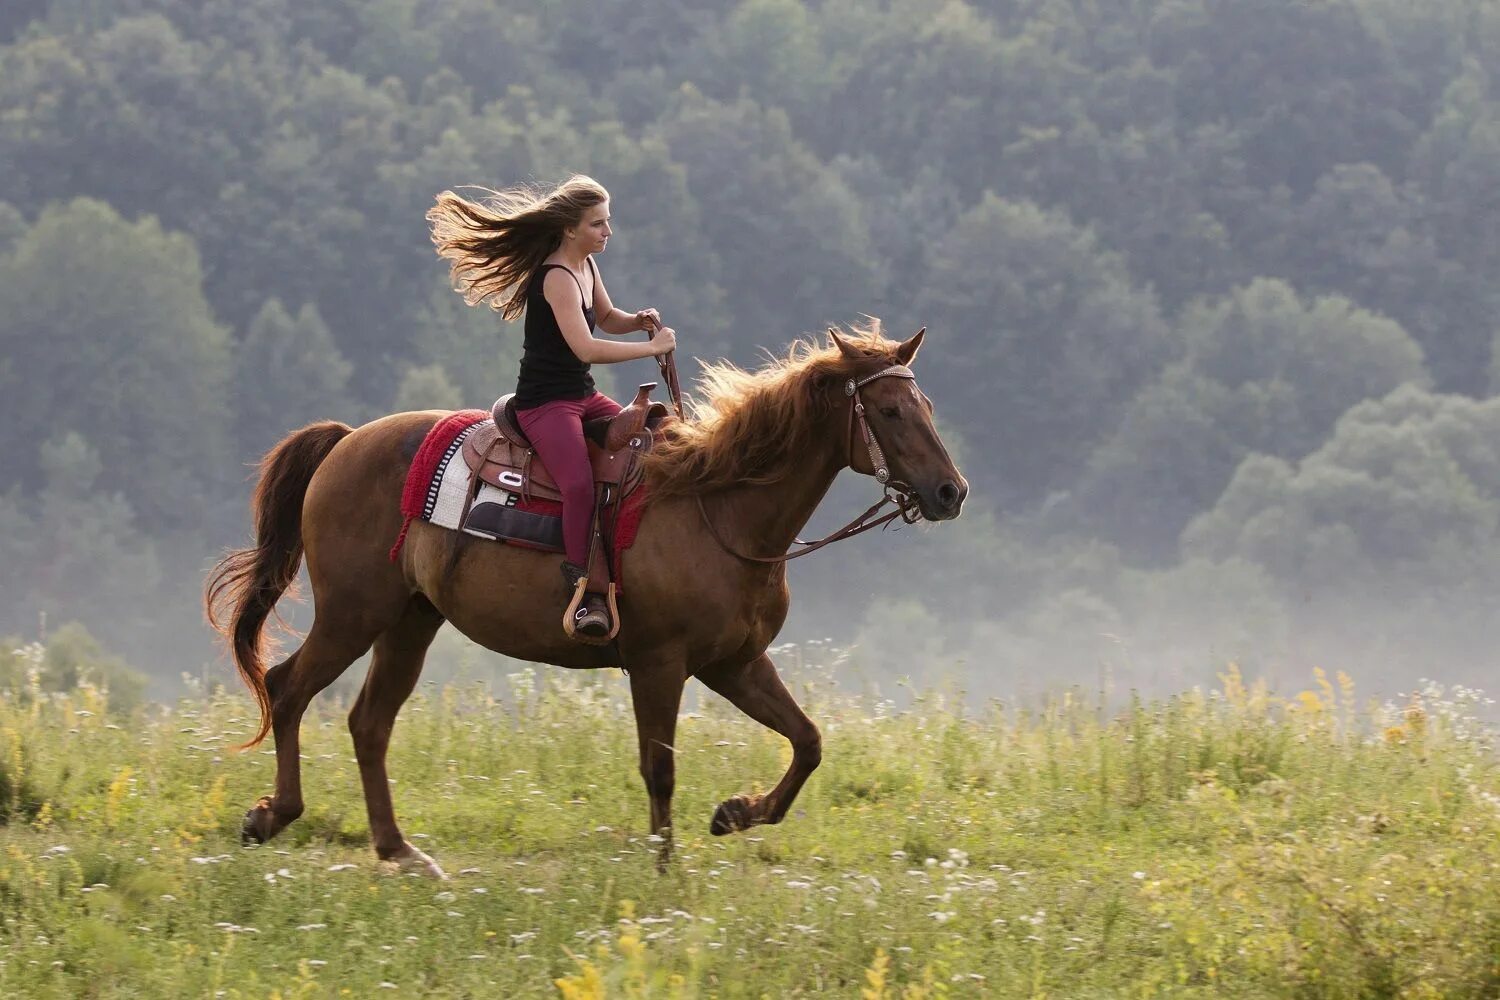 Ж кон. Прогулка на лошадях. Девушка едет на коне. Верхом на коне. Лошадь скачет.